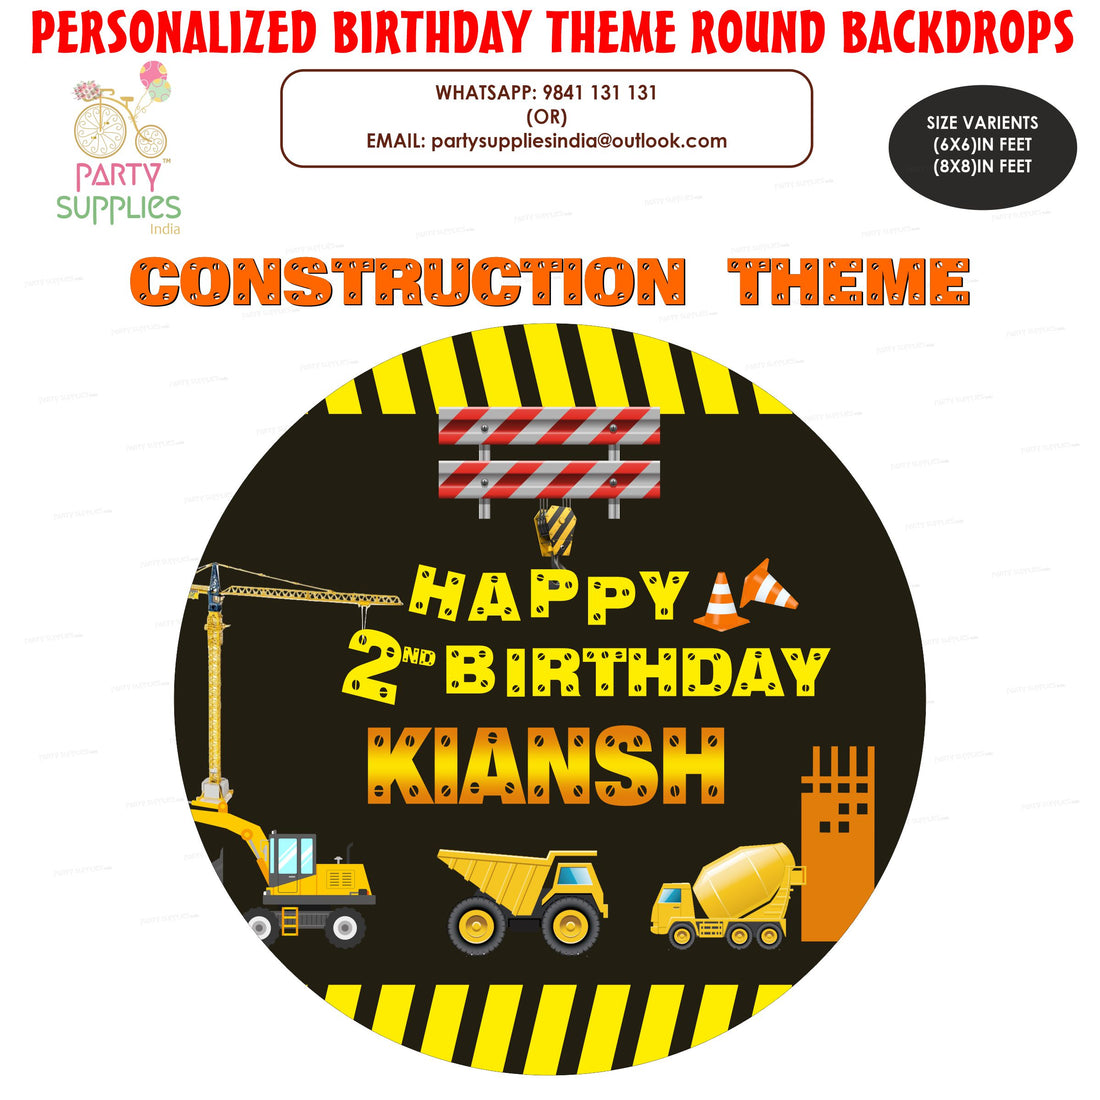 PSI Construction Theme Customized Round Backdrop